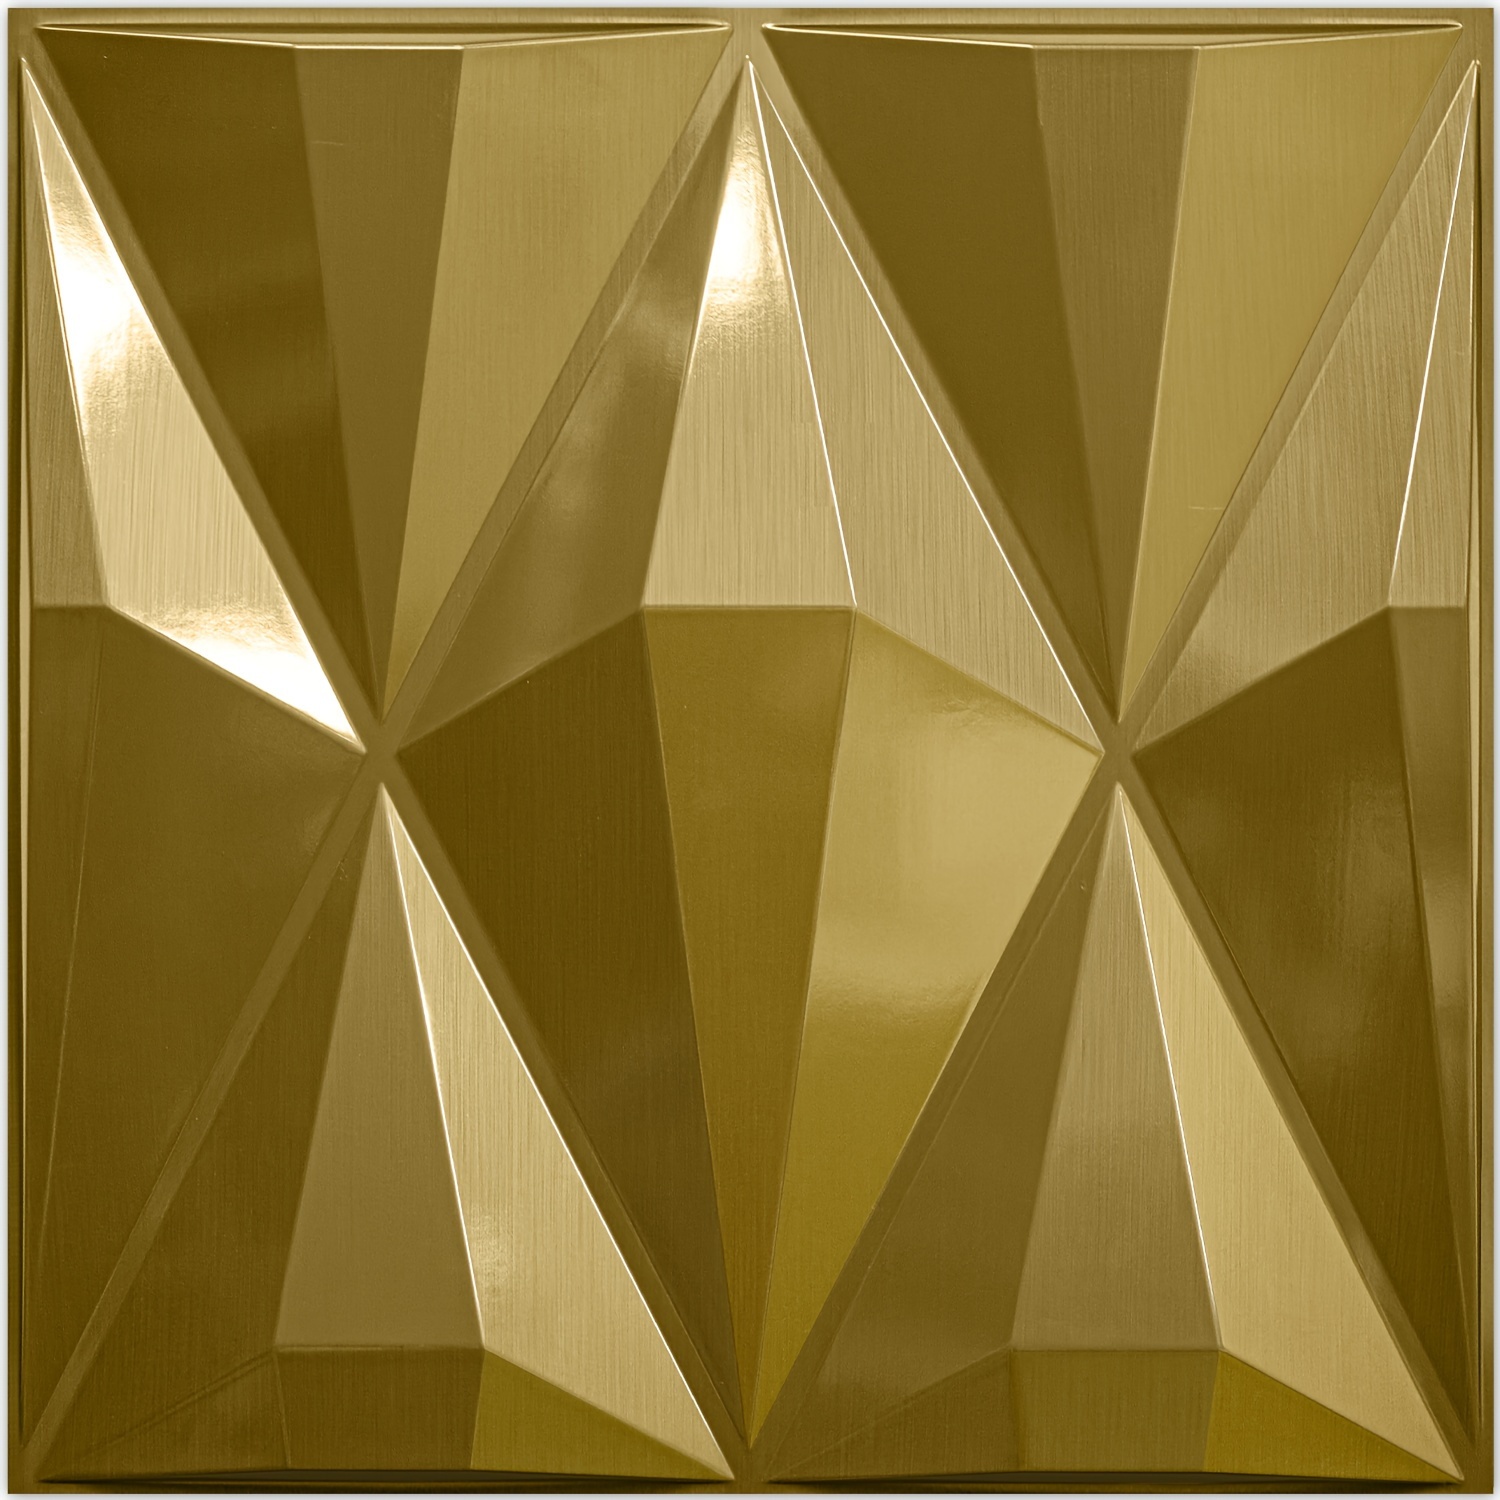 

Stickgoo Gold Diamond 3d Wall Panels Peel And Stick, 19.7" X 19.7", Pvc Wall Tiles, 3d Textured Wall Panels For Interior Wall Decor, 32 Sq.ft, 12 Pcs, Gold Color